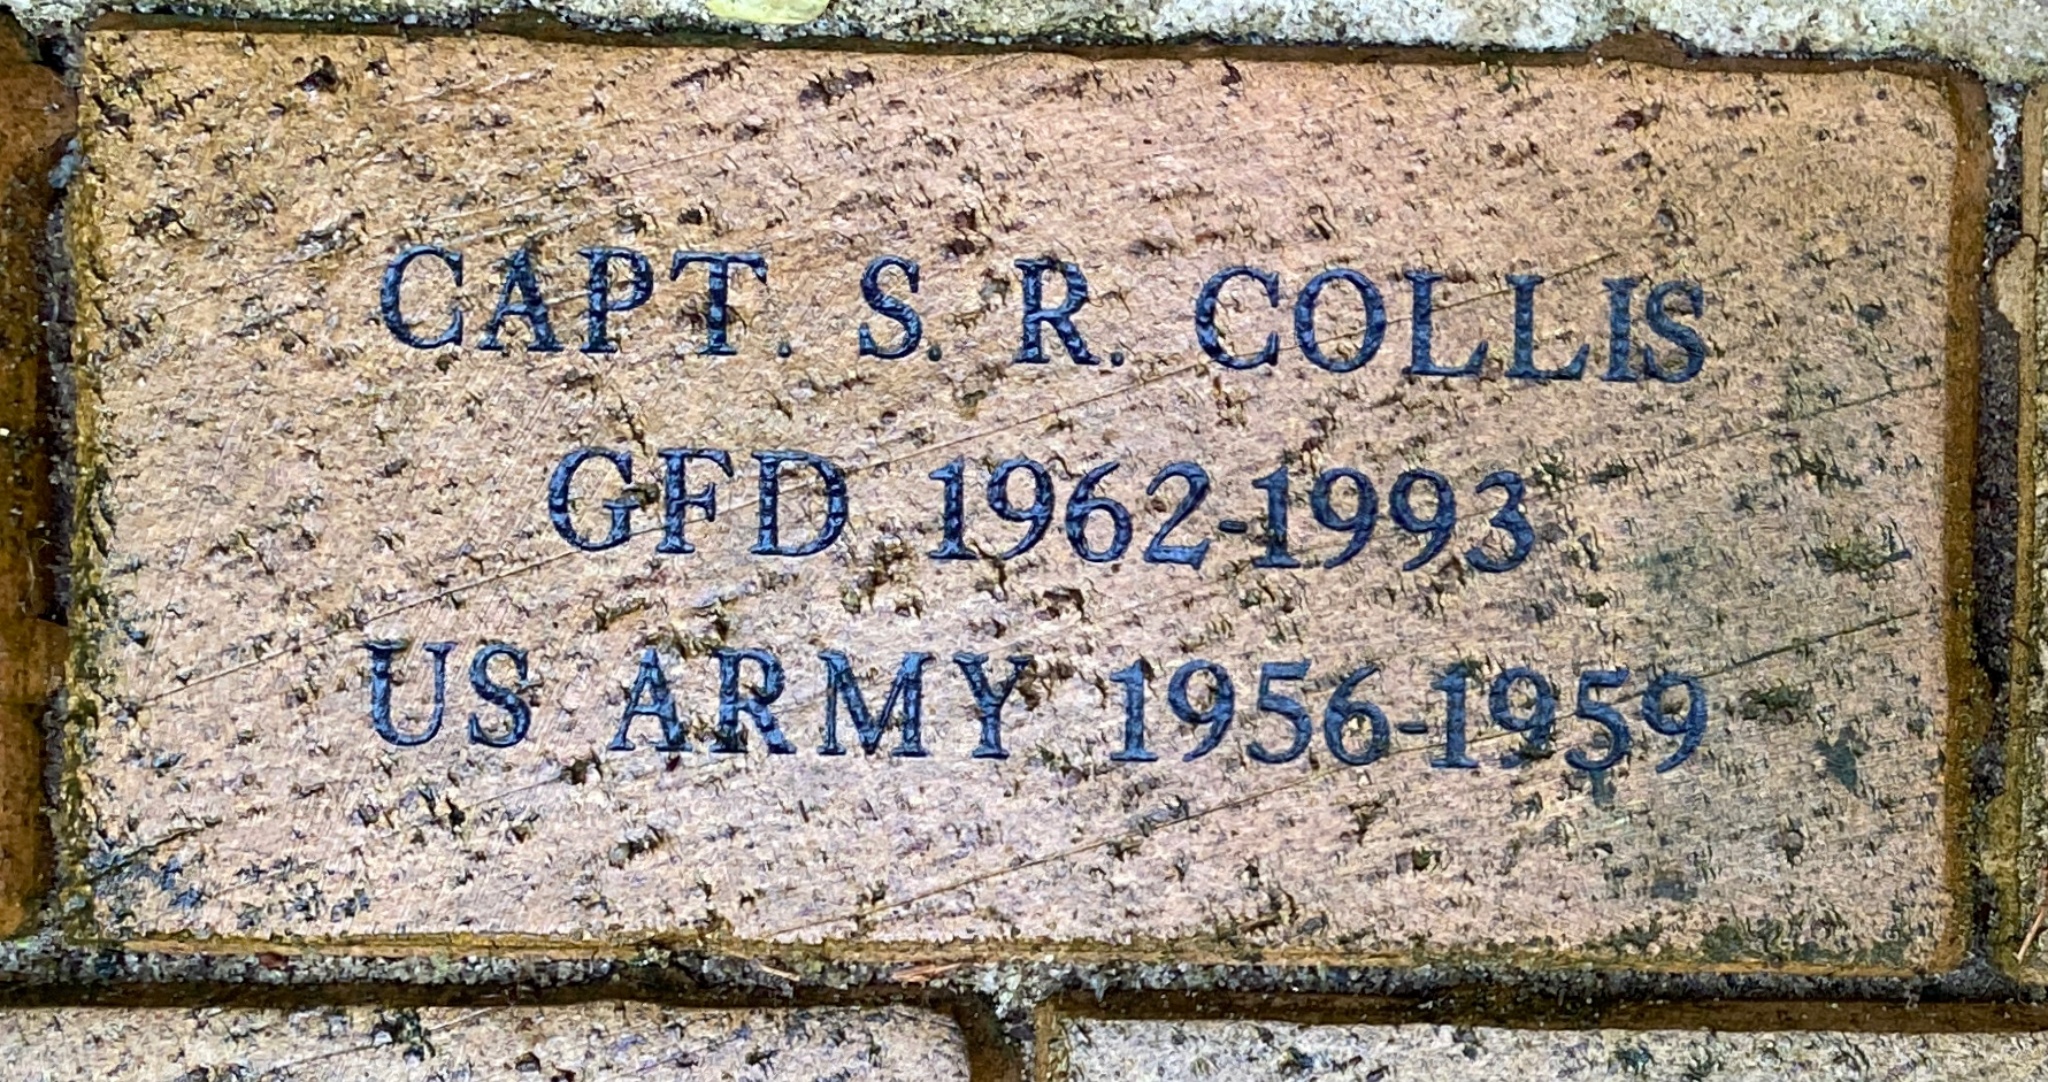 CAPT S. R. COLLIS GFD 1962-1993 US ARMY 1956-1959